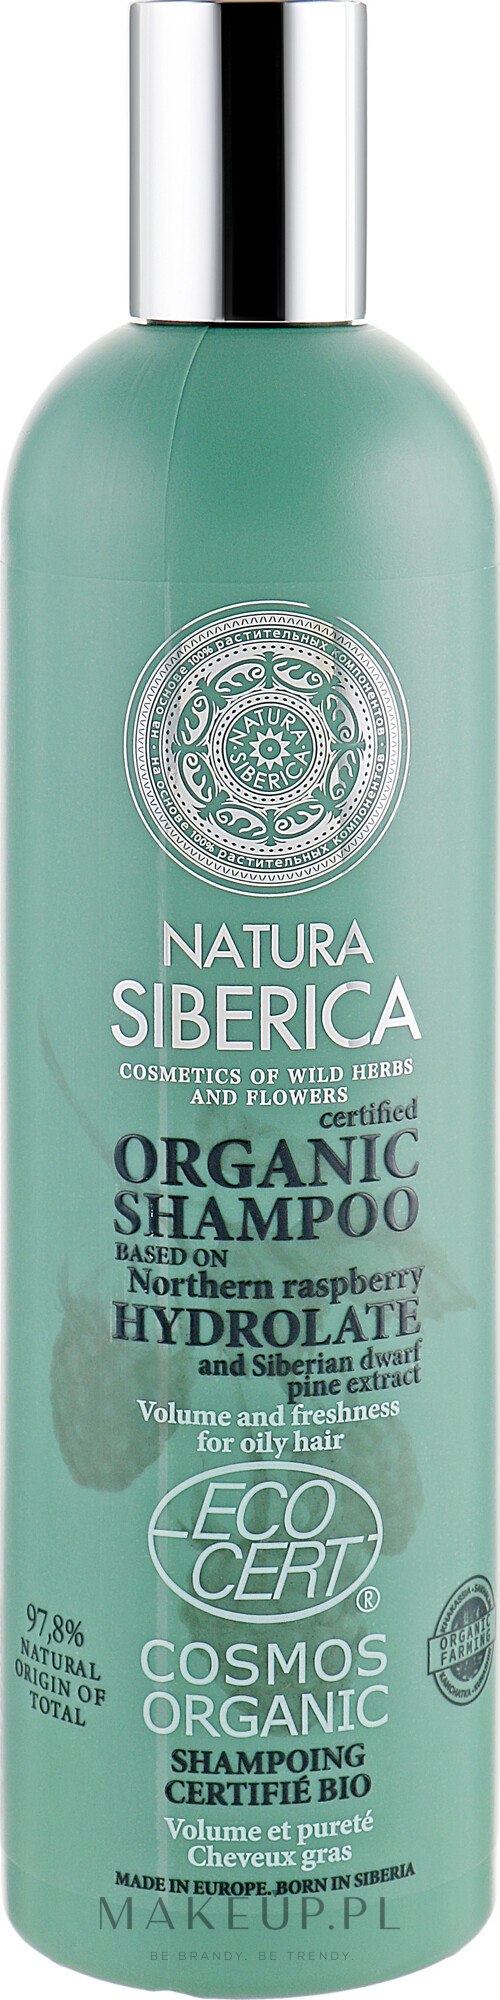 natura siberica szampon volumizing wizaz